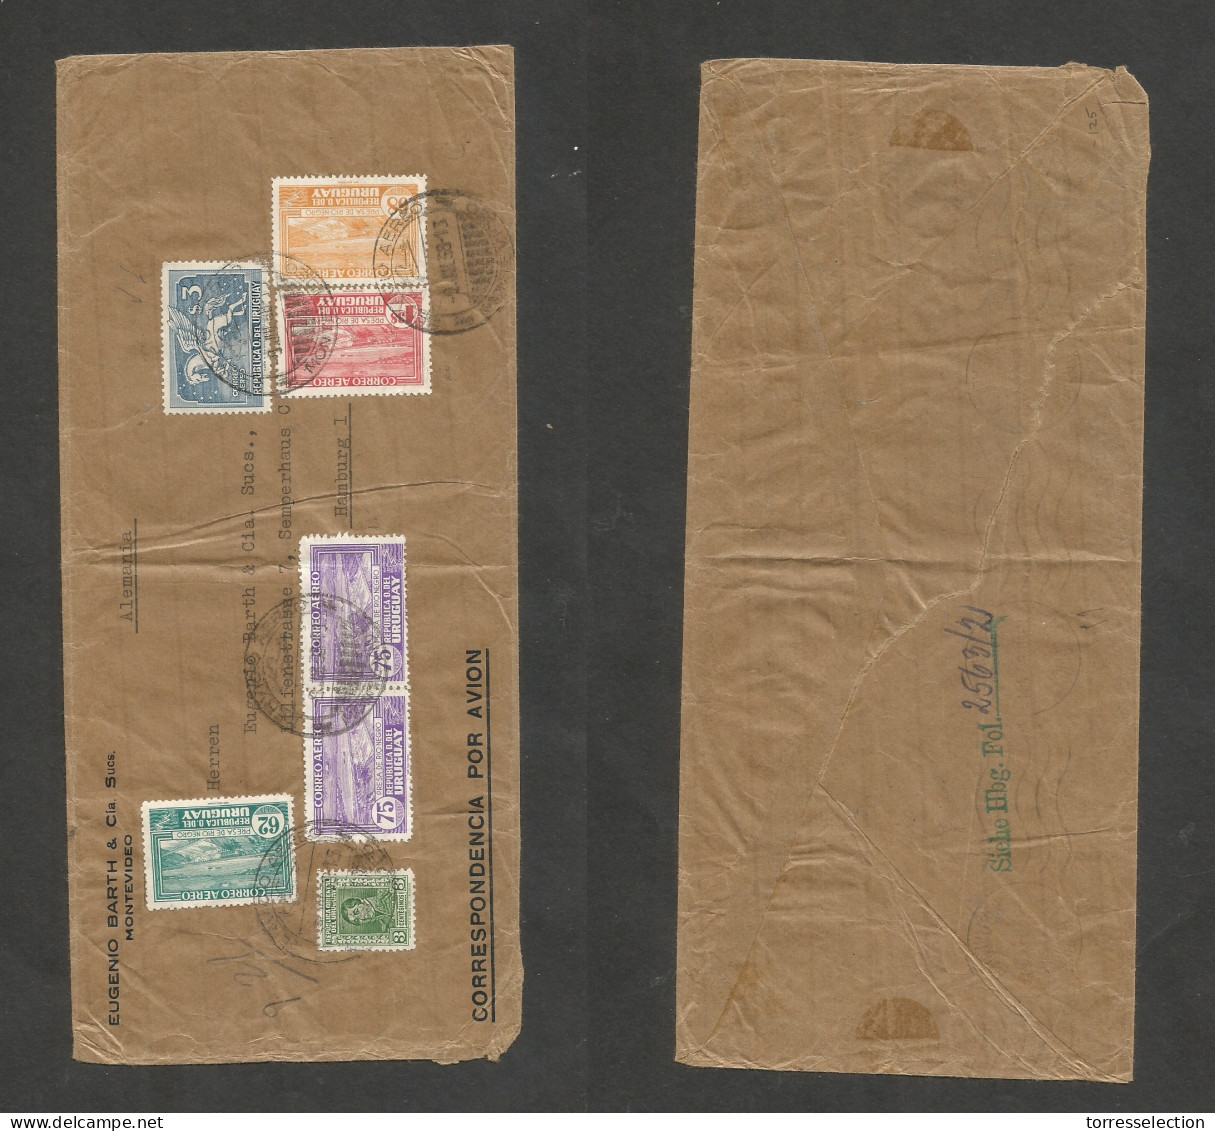 URUGUAY. 1938 (2 July) Montevideo - Germany, Hamburg. Air France Multifkd Envelope. High Rate, Scarce Values On Cover. F - Uruguay